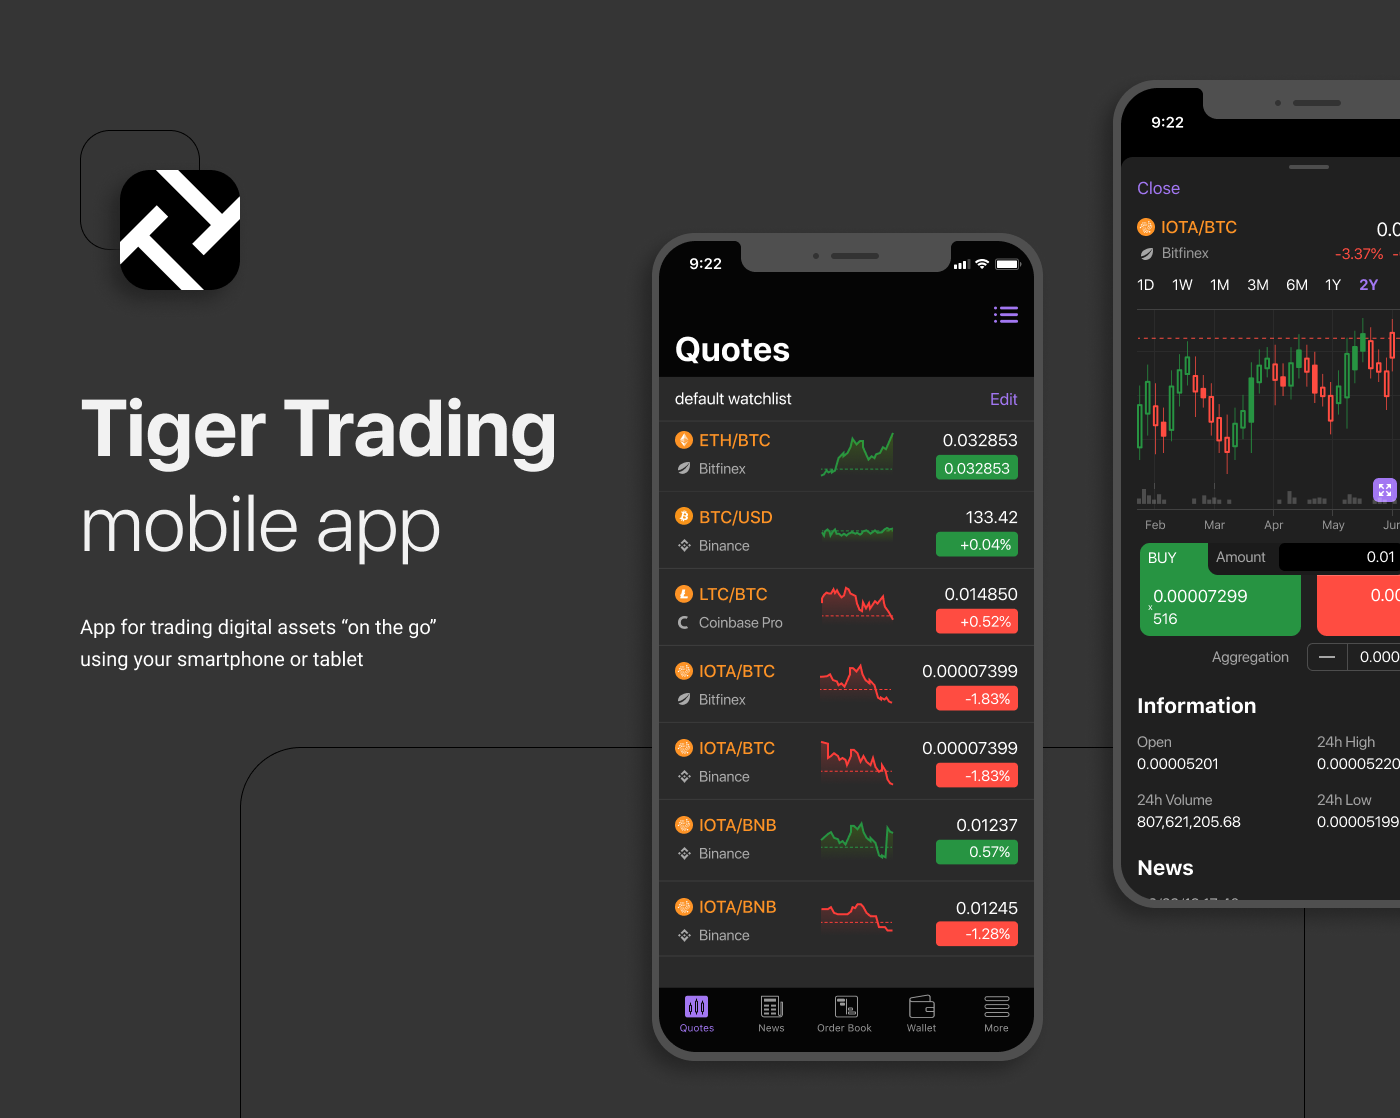 Mobile trading app for digital assets.